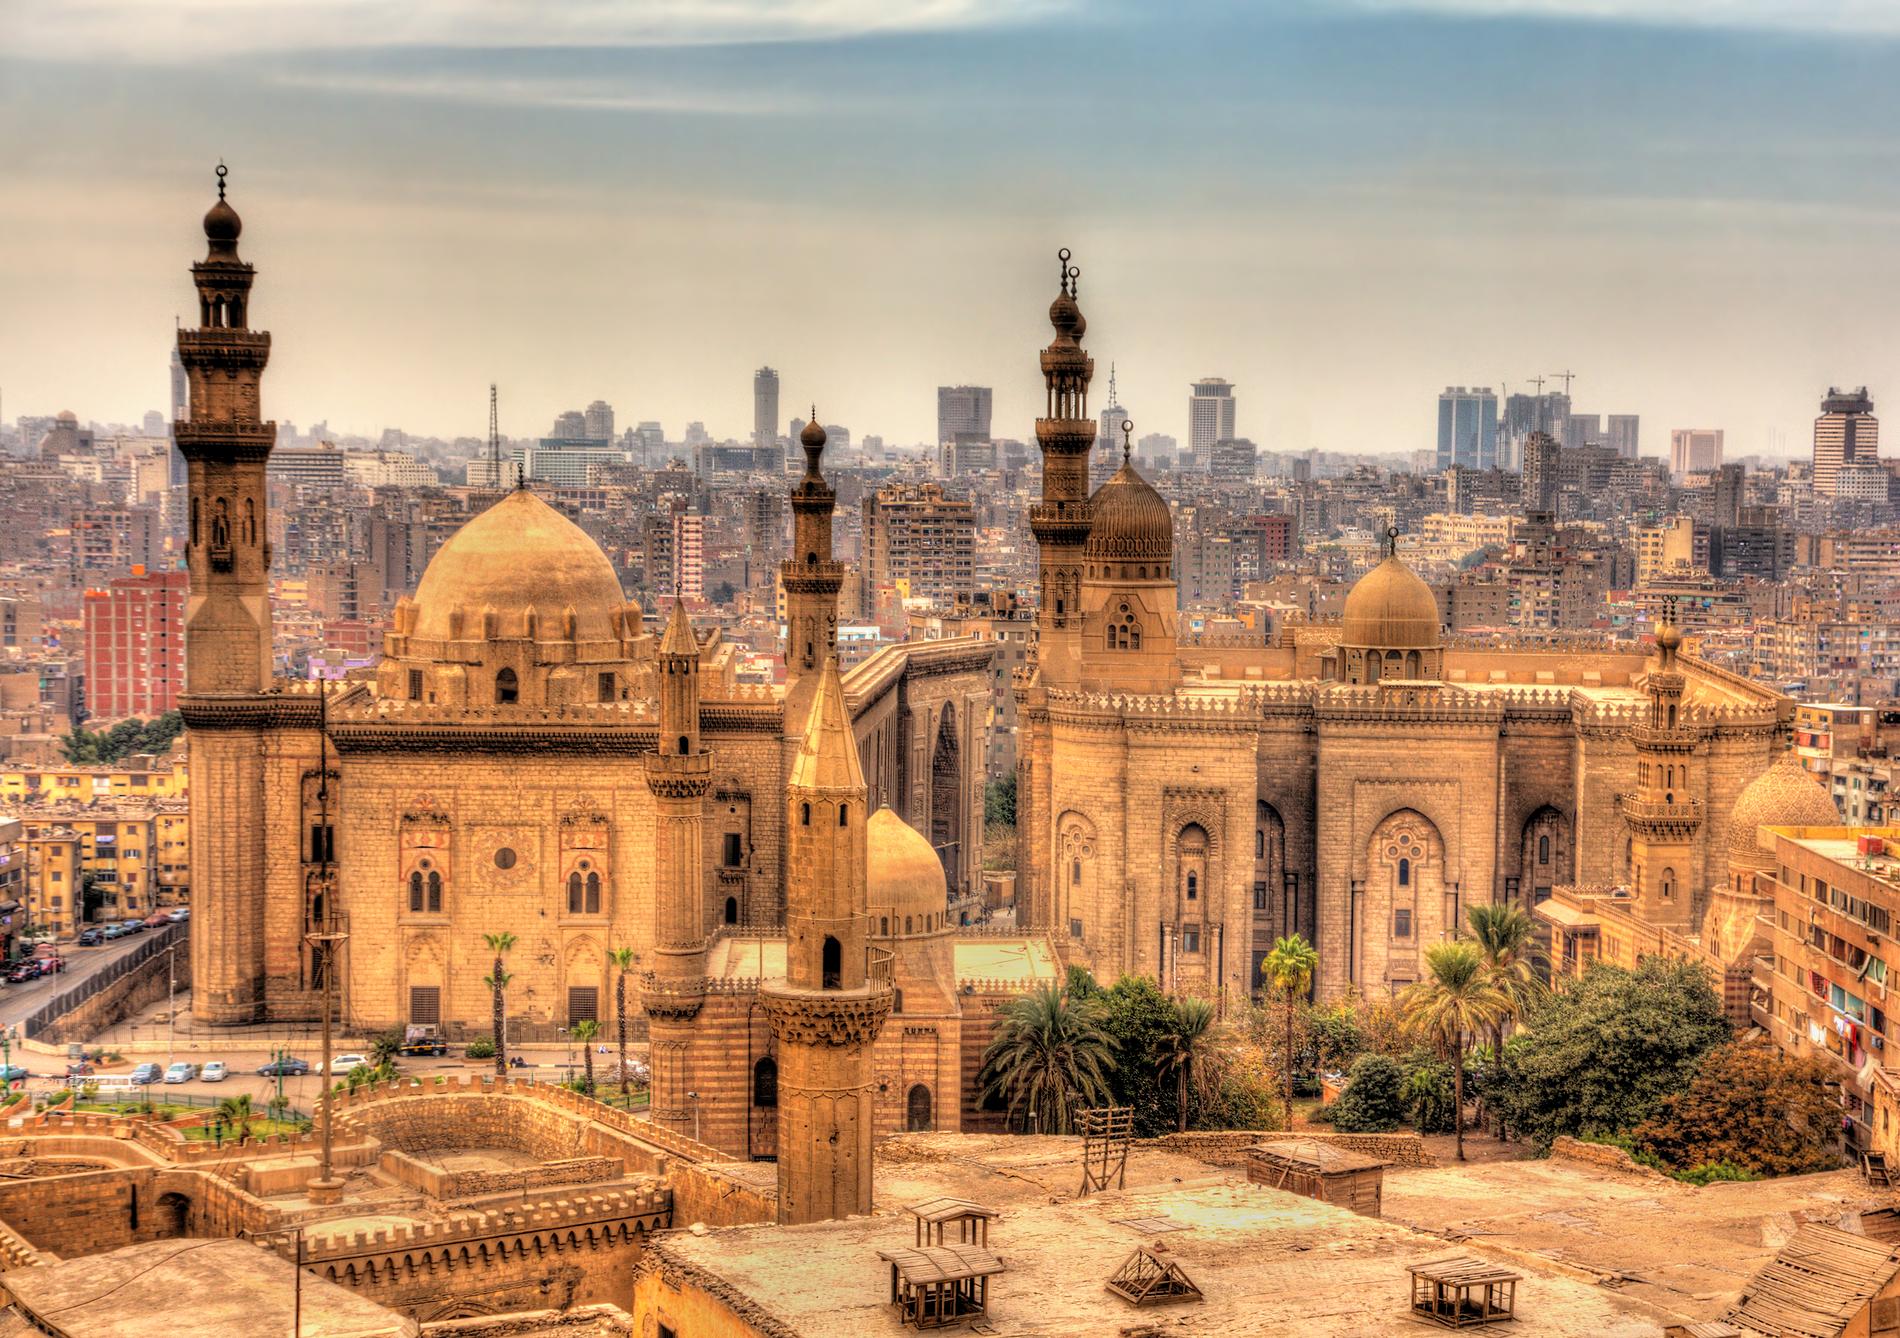 Kairo ligger nära de berömda pyramiderna. 